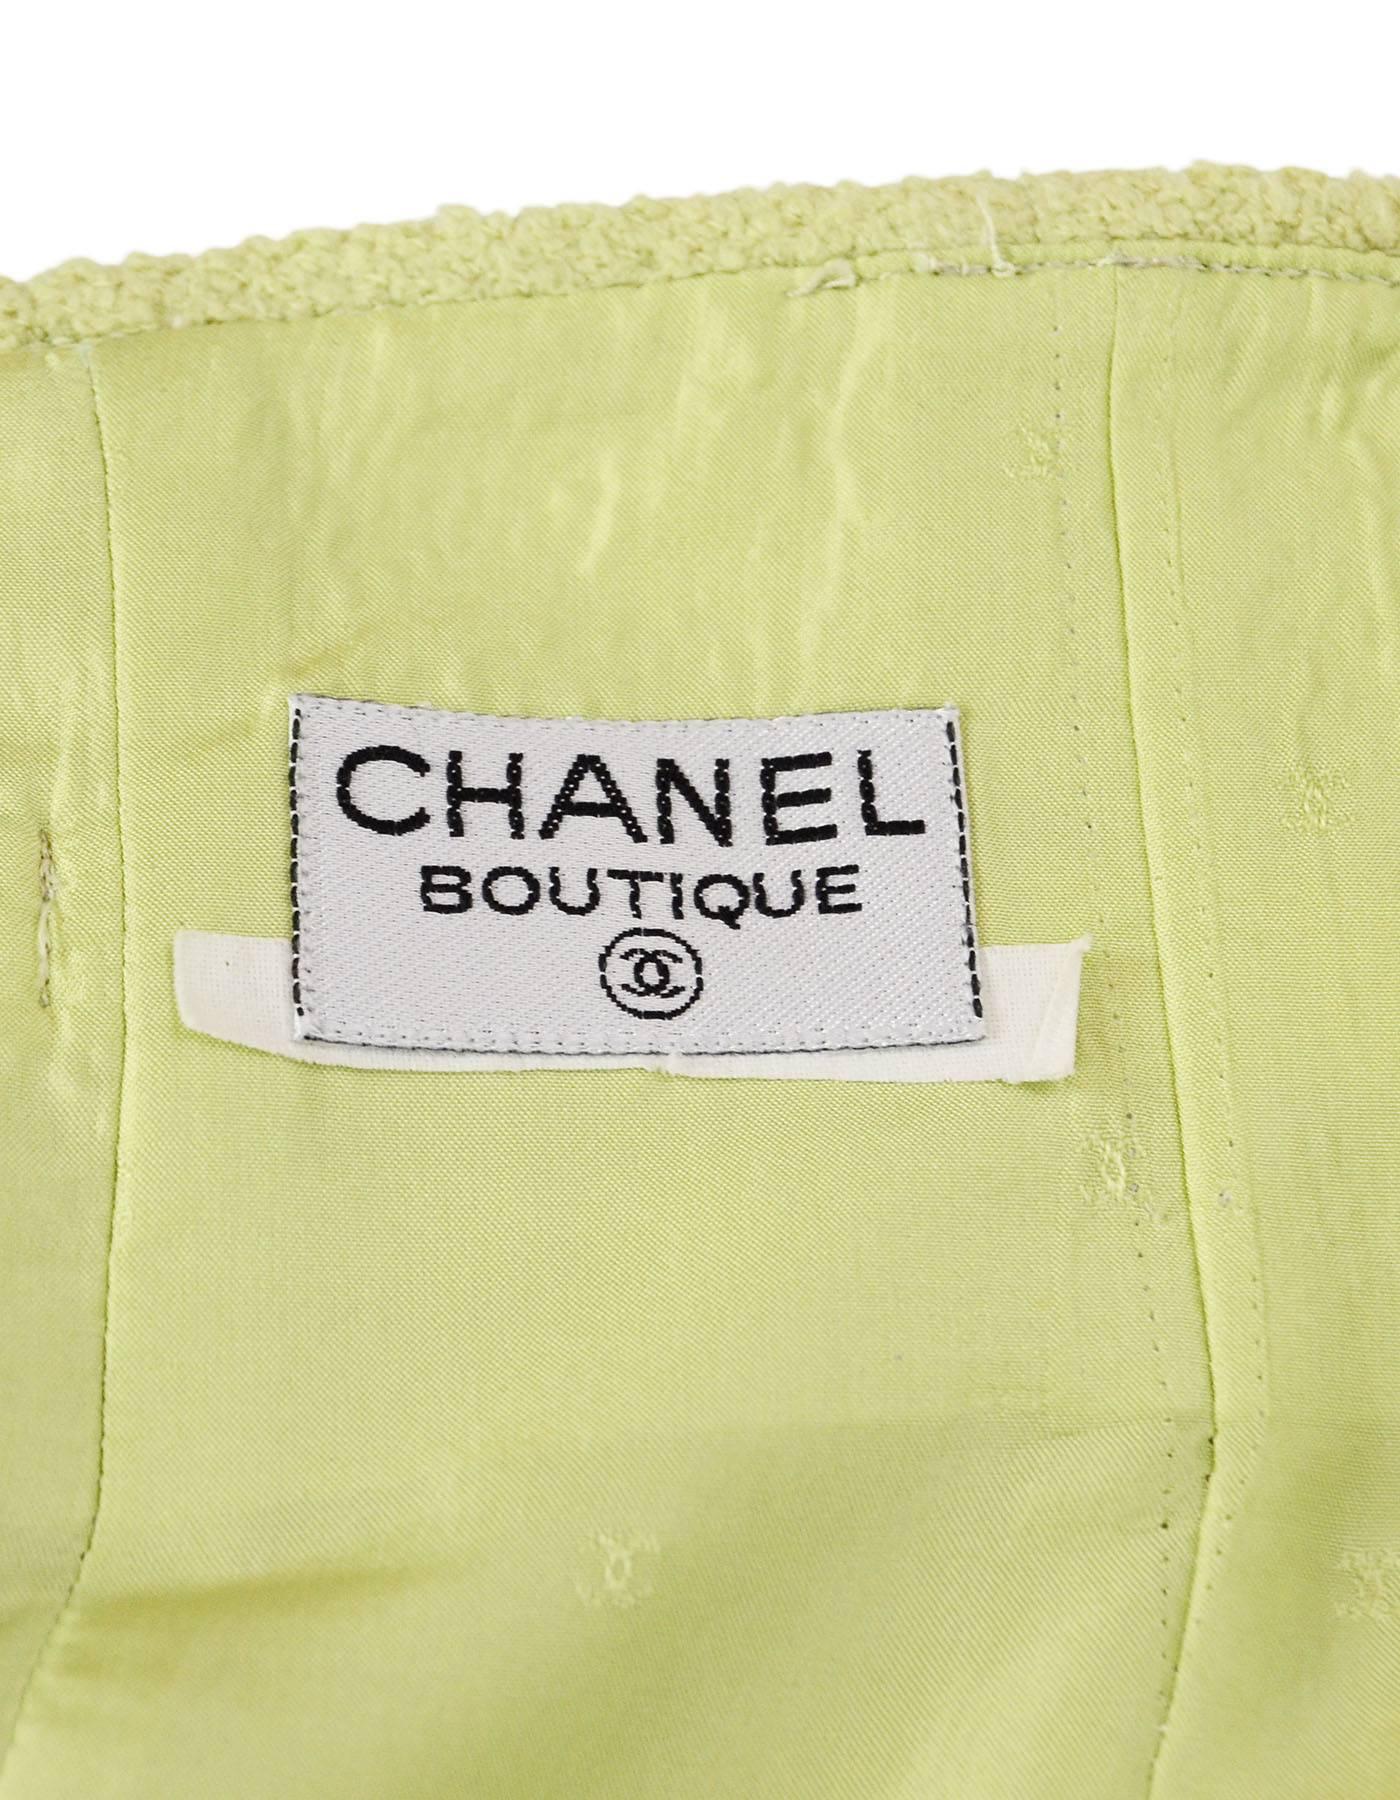 Women's Chanel Chartreuse Boucle Skirt sz M